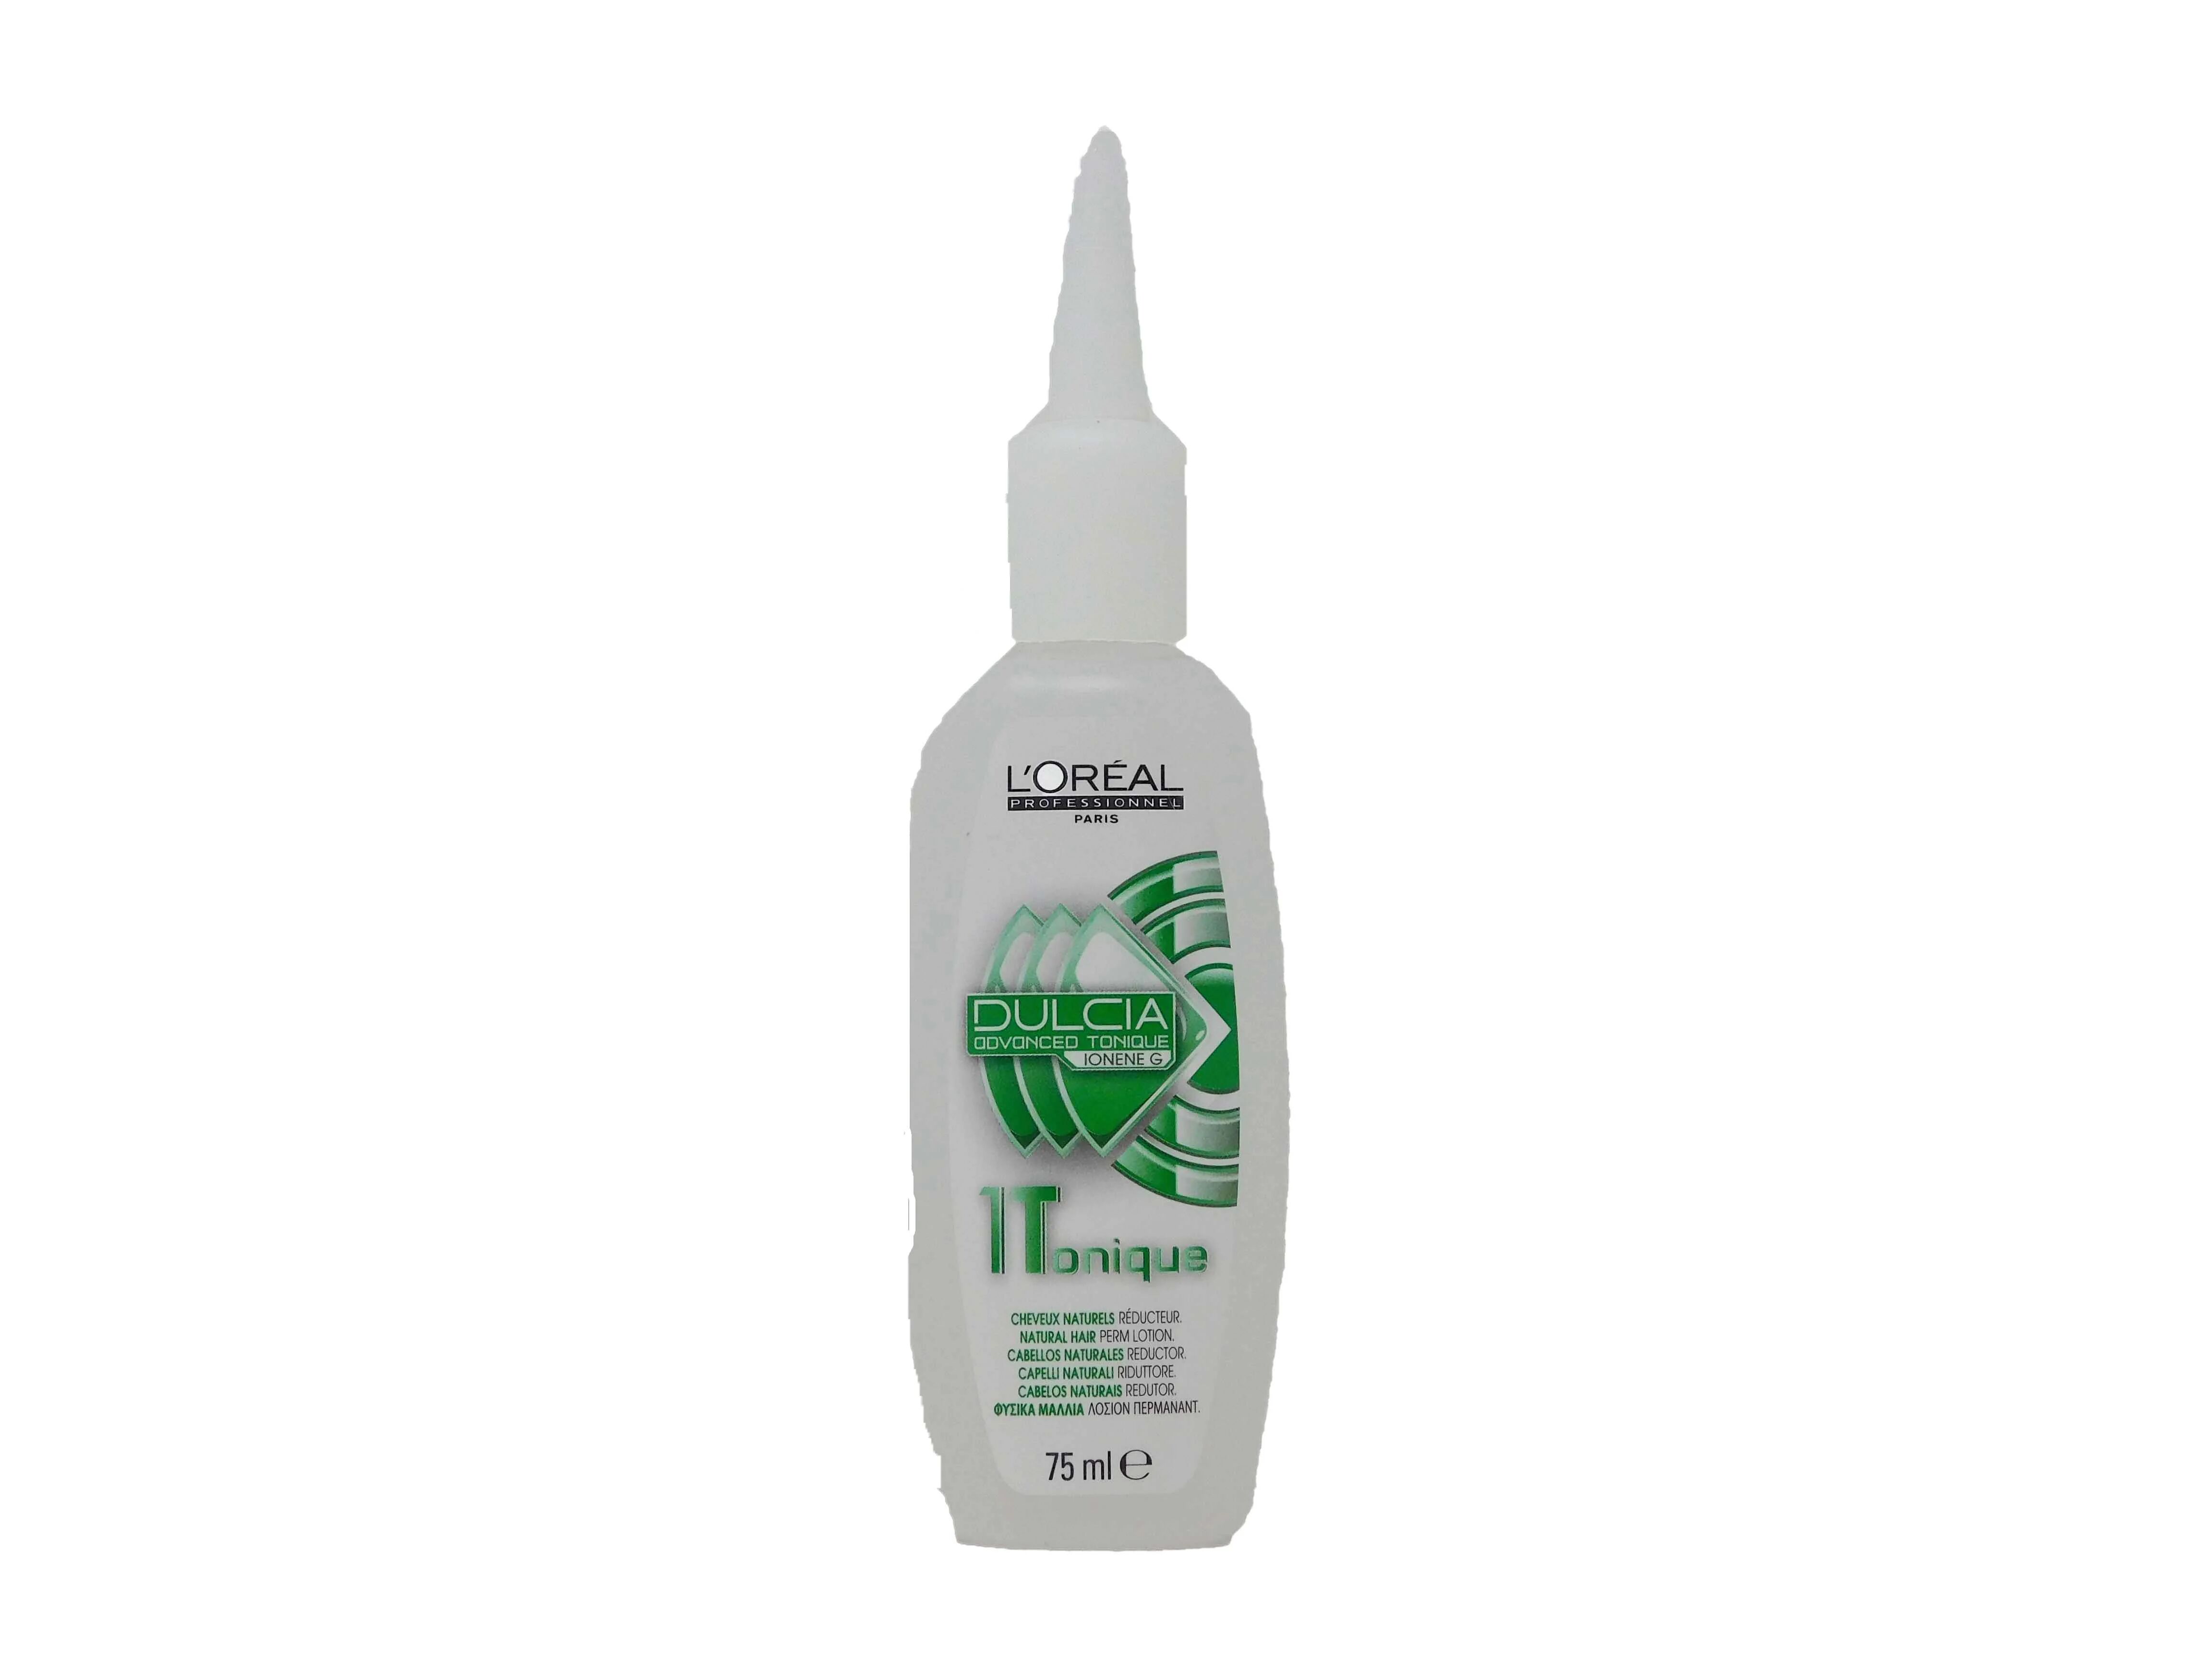 L'Oreal L'Oréal Dulcia Advanced Tonique 1 - Permanente Capelli Naturali 75 ml